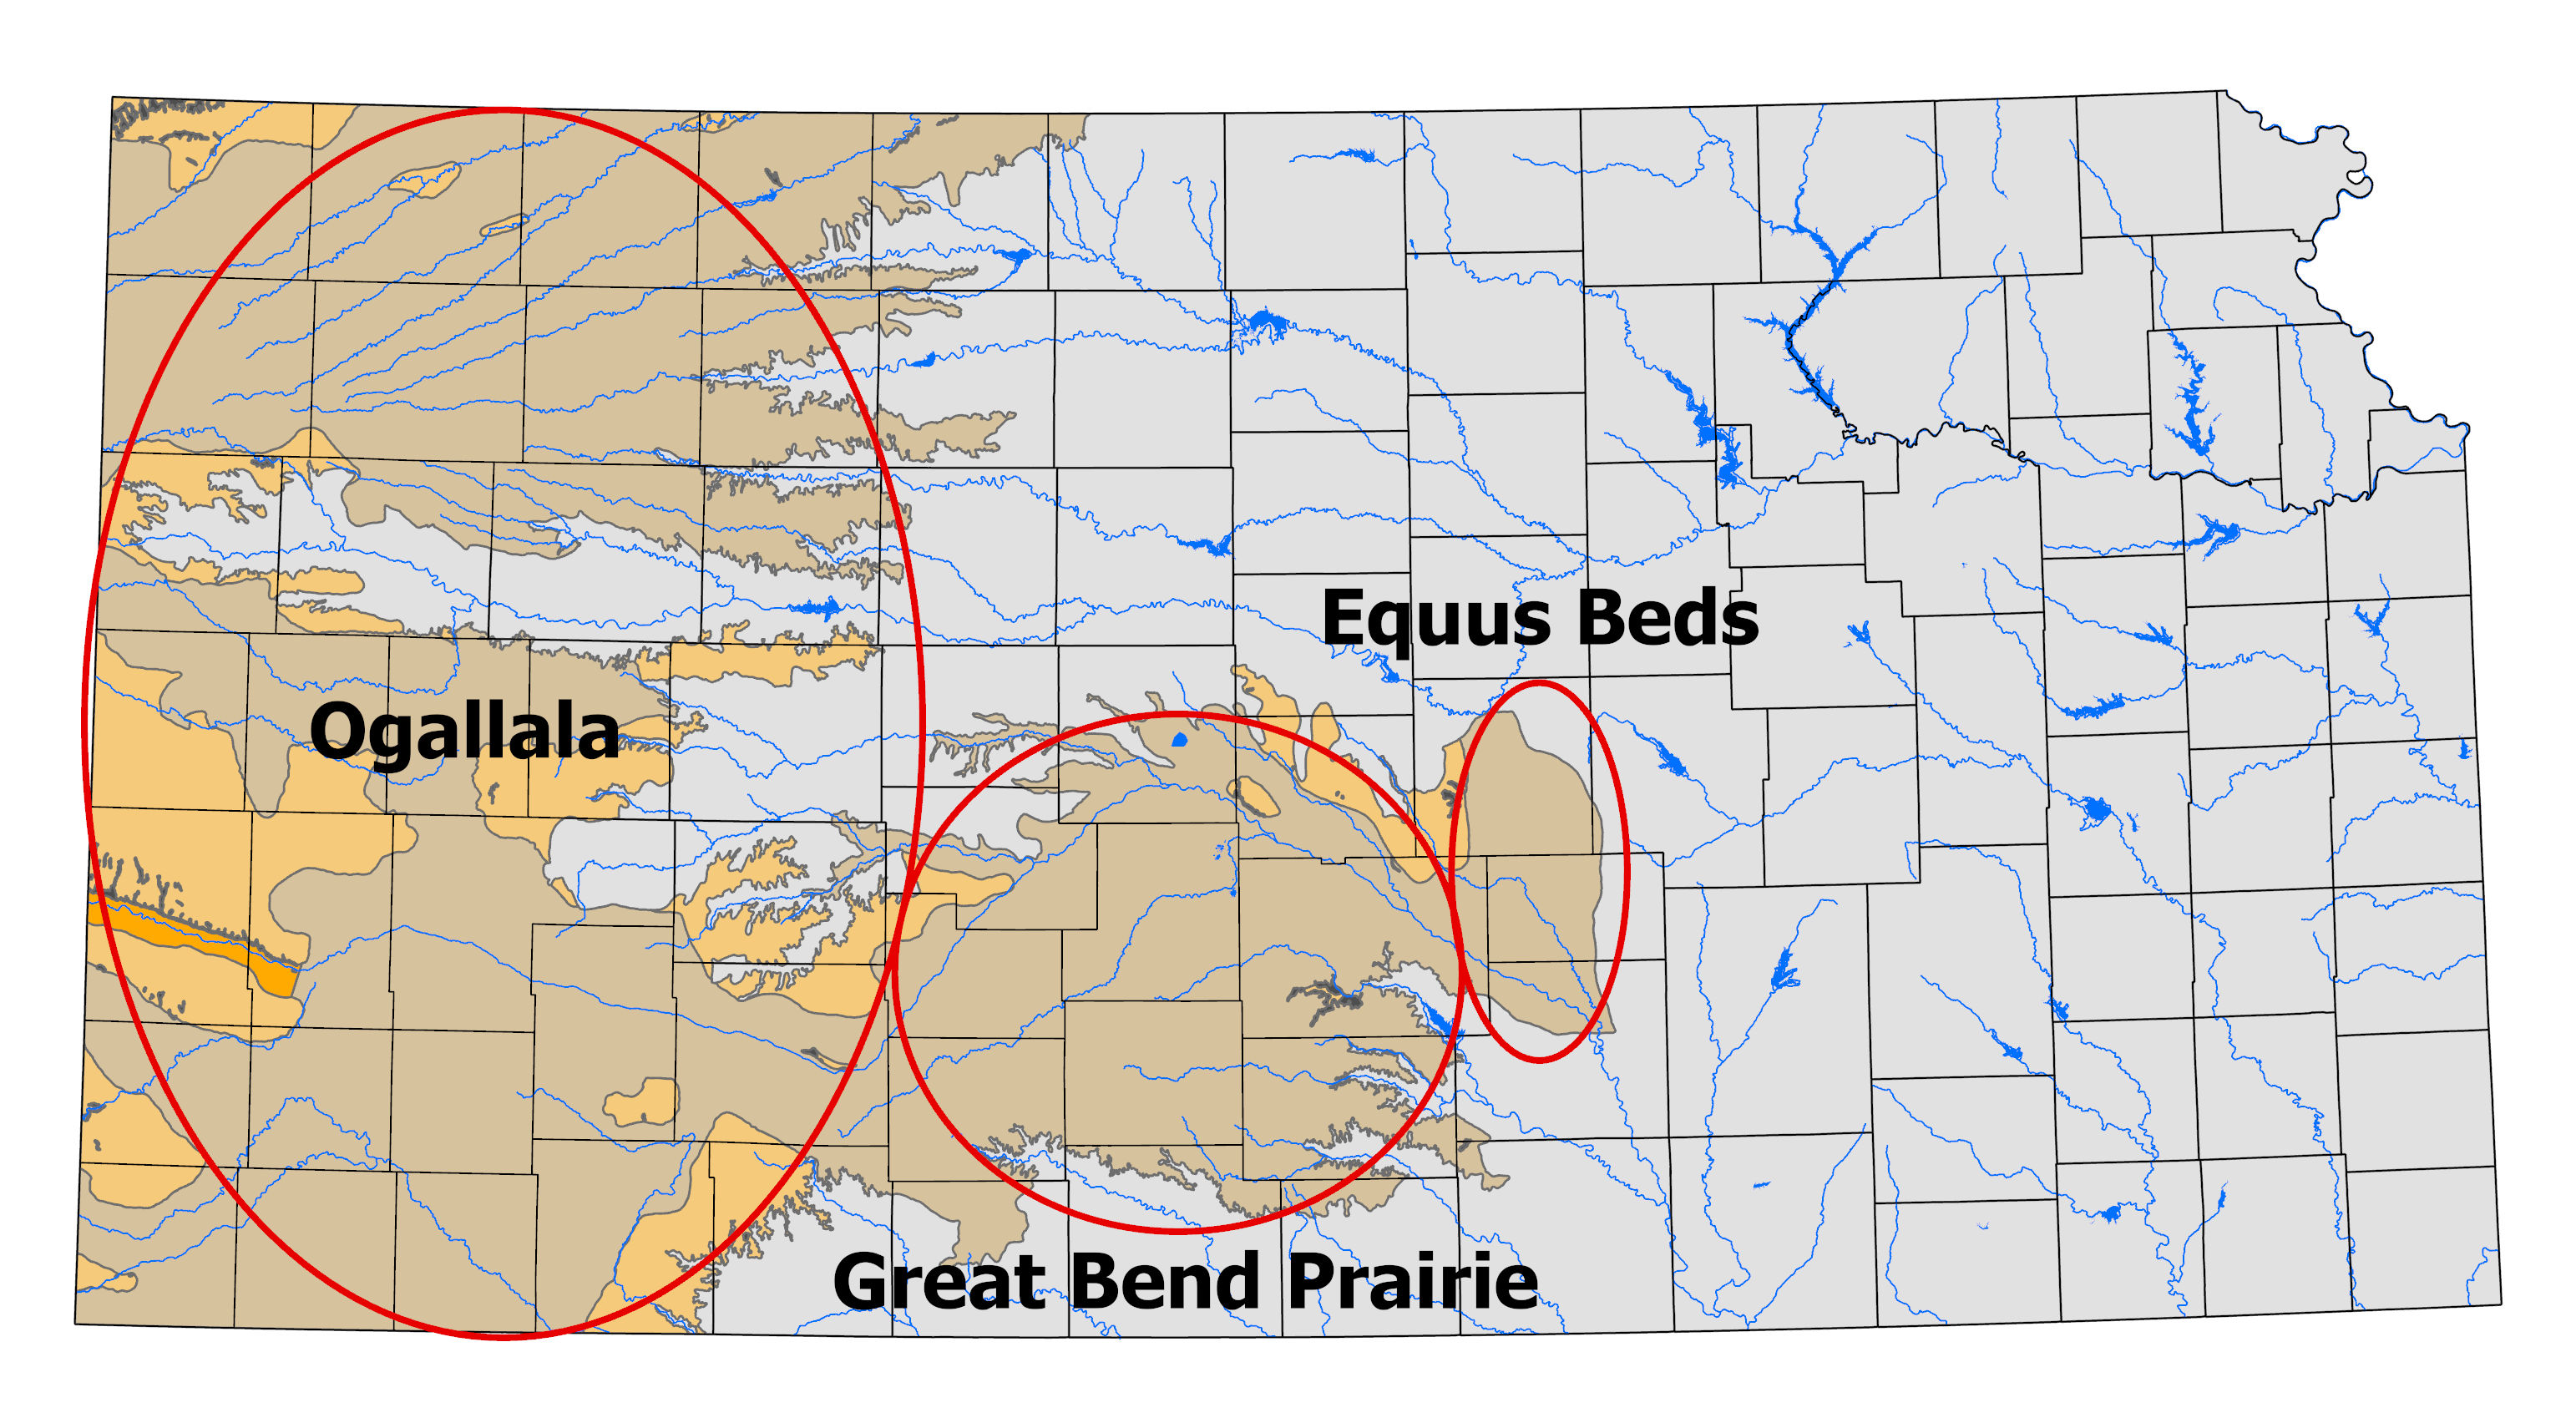 Map: High Plains aquifer region